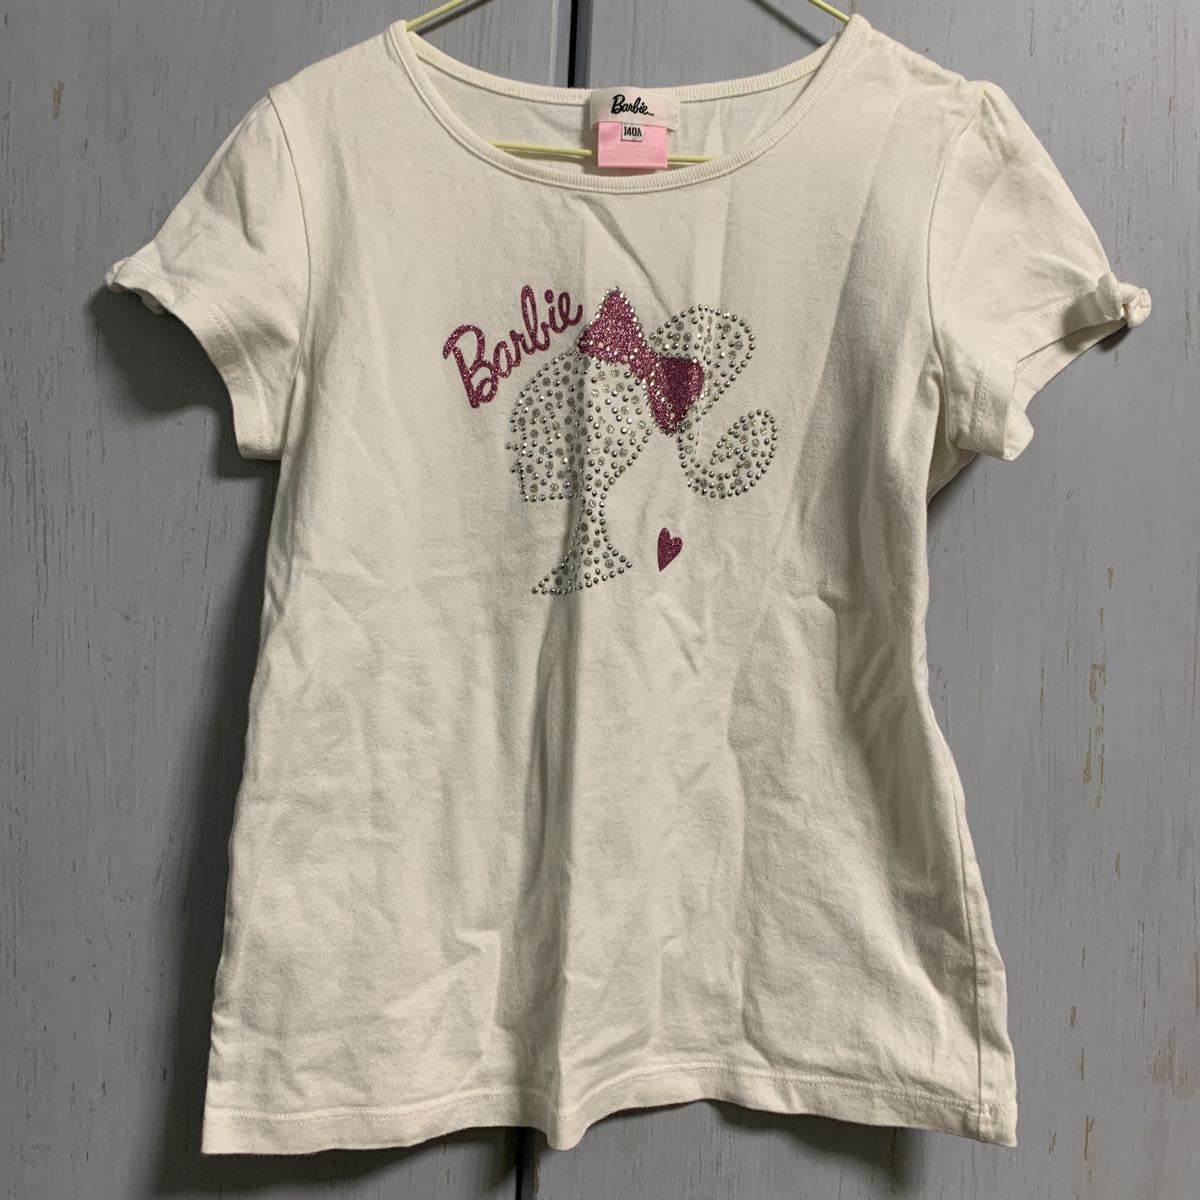 used 子供服 「 バービー 140センチ 白色 半袖 Tシャツ 」Barbie